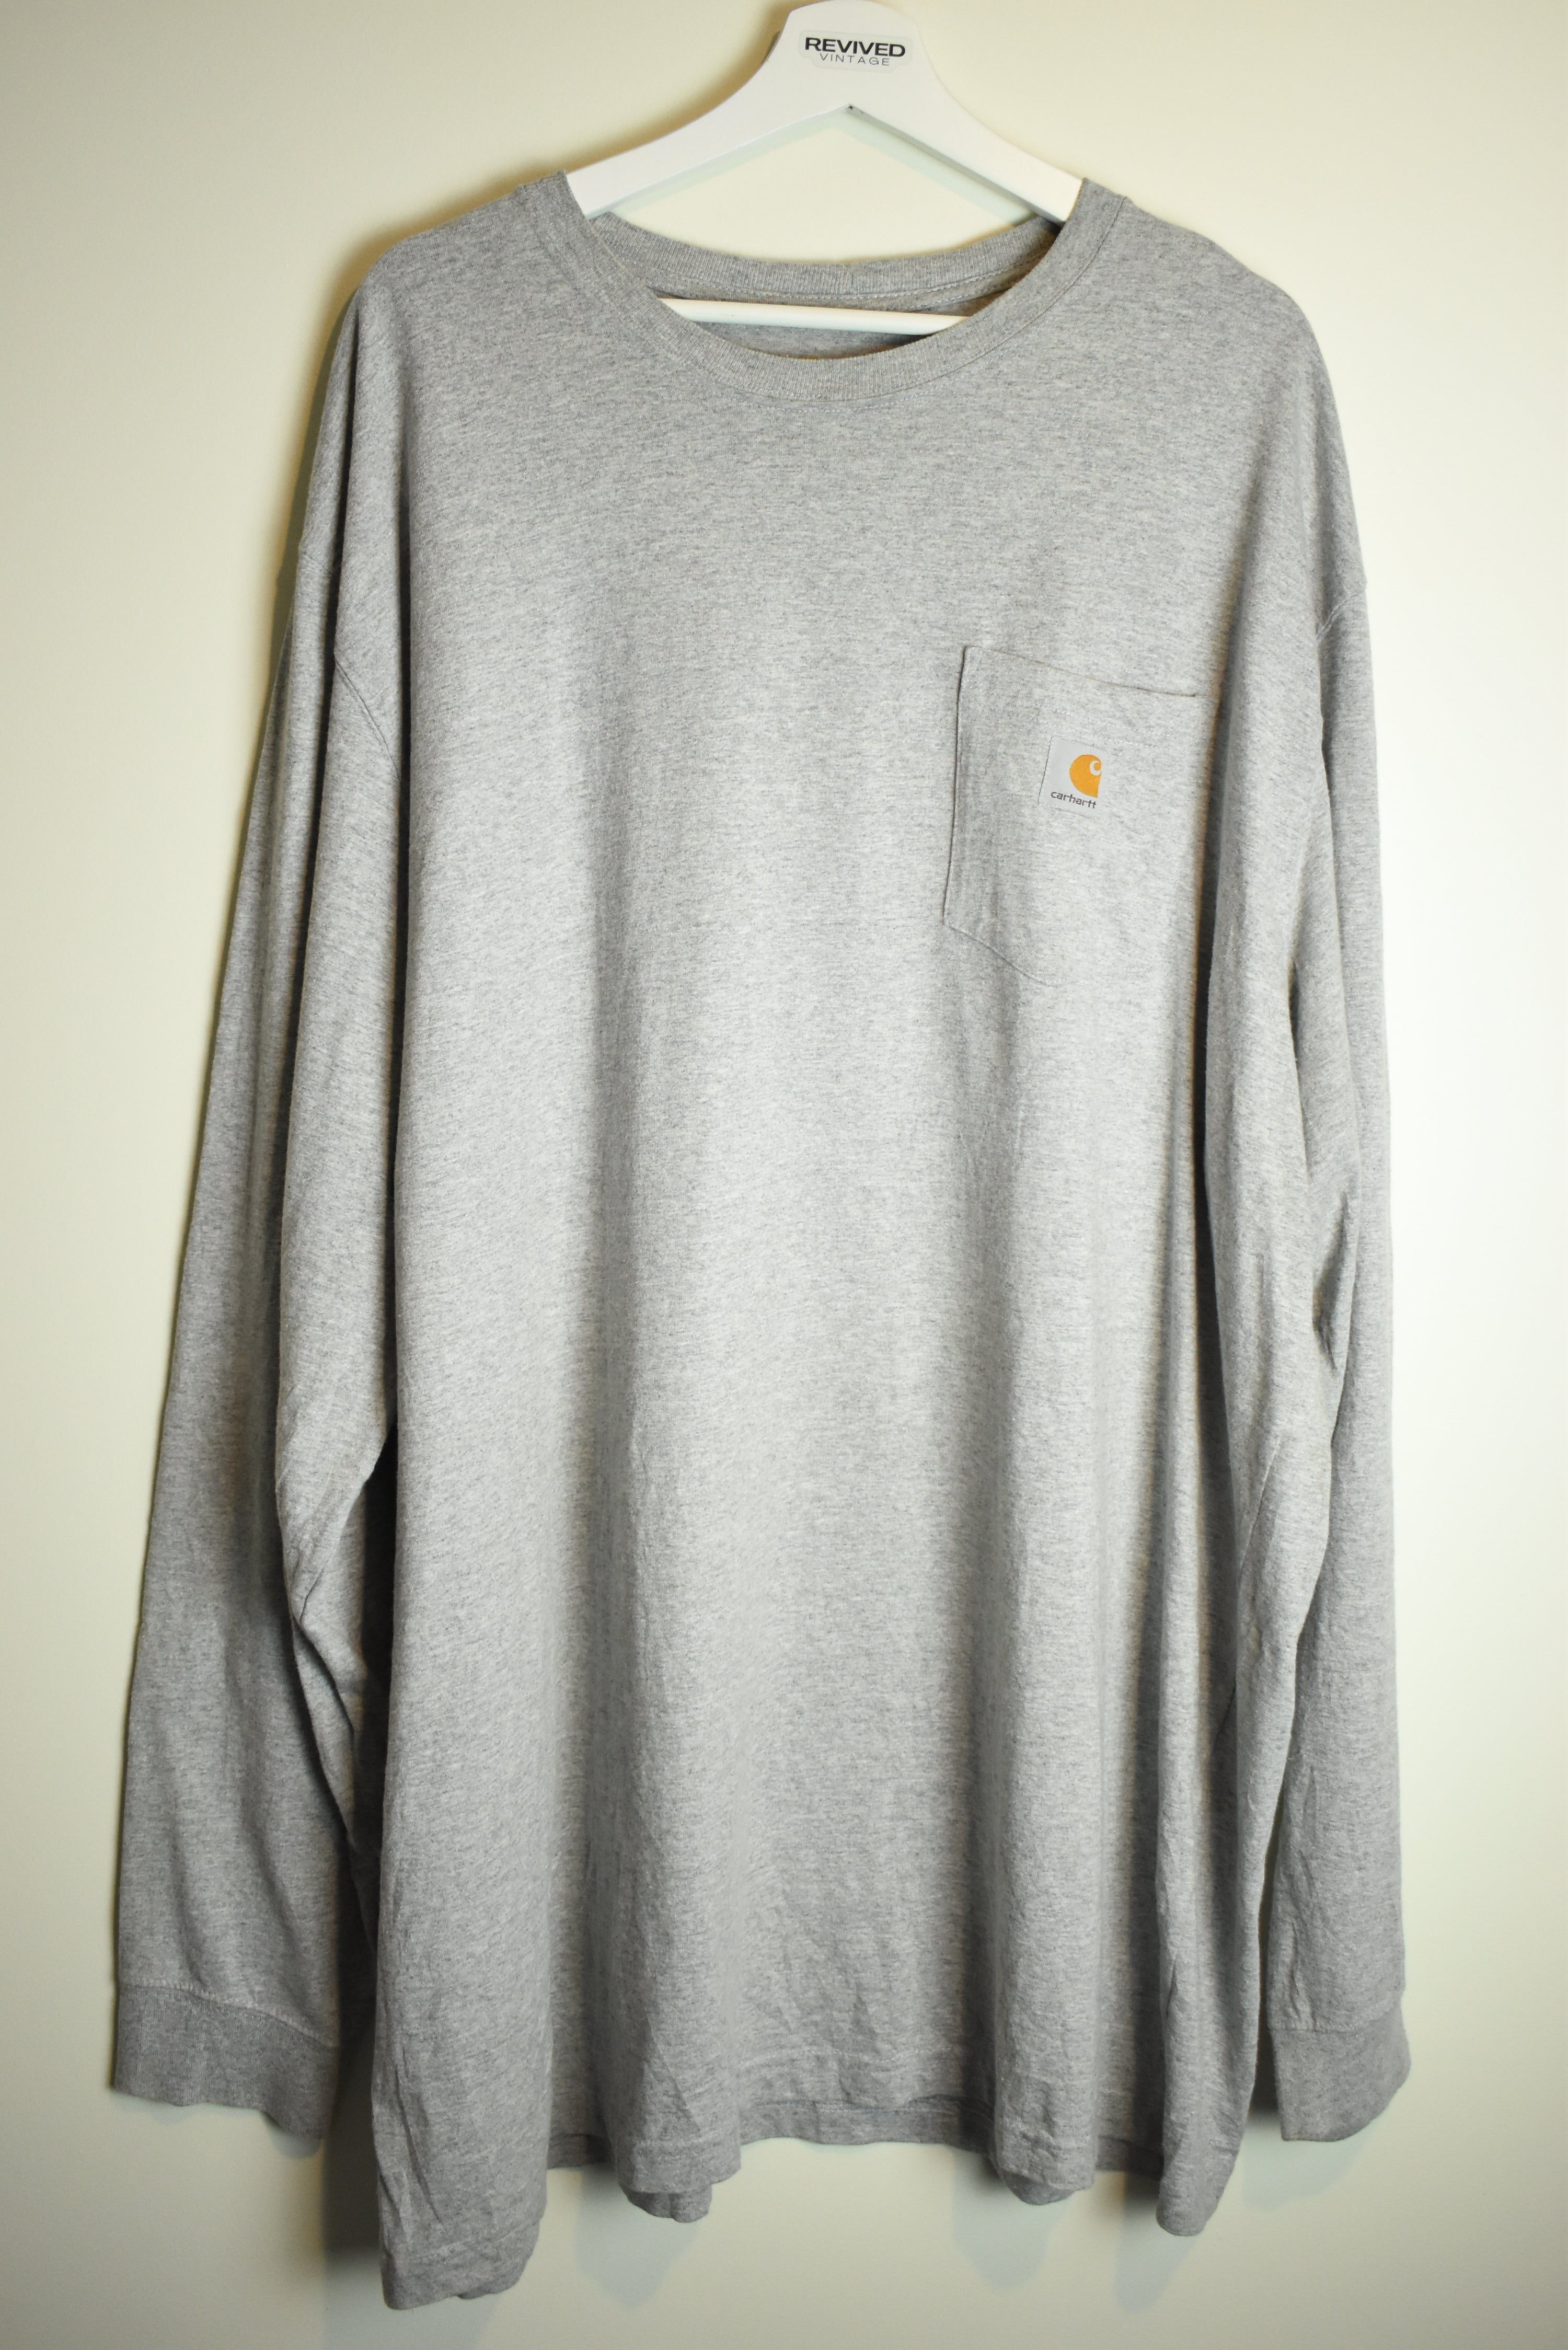 Vintage Carhartt Grey Long Sleeve Cotton Shirt Original Fit 3XL